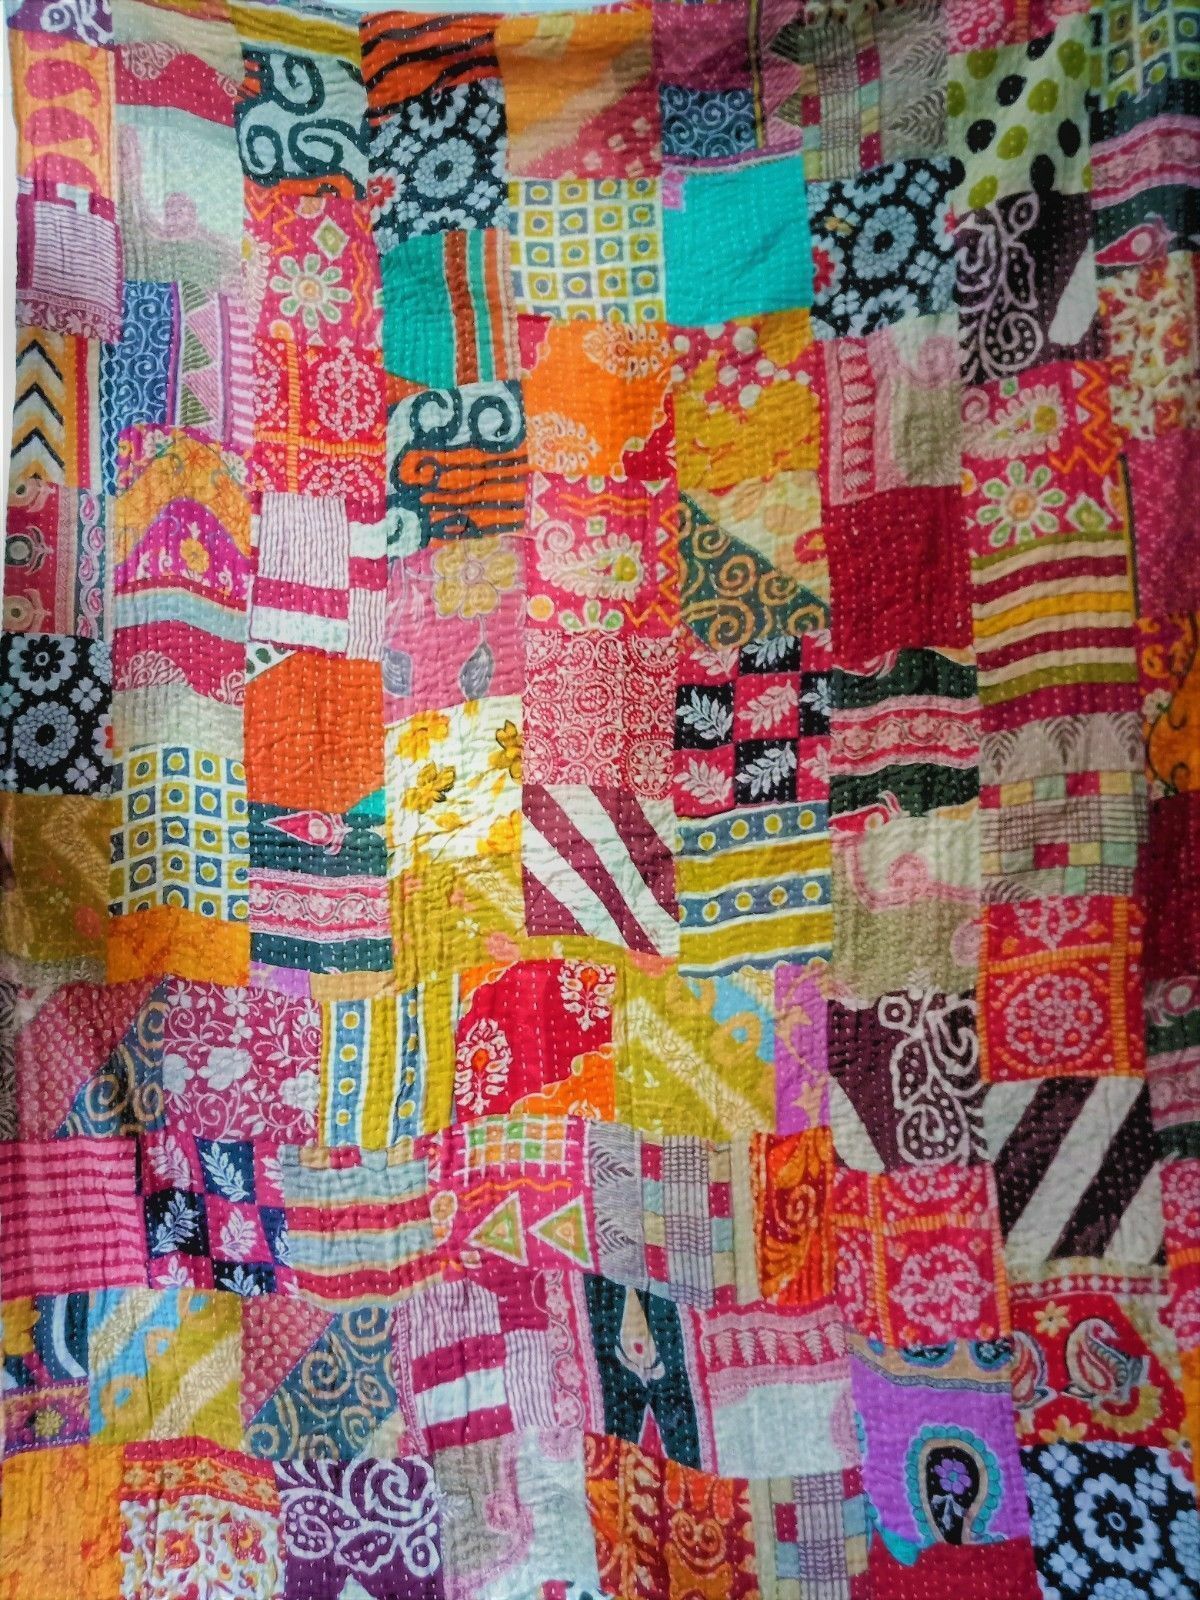 Indian Handmade Quilt Vintage Patchwork Kantha Bedspread Throw Cotton Blanket 